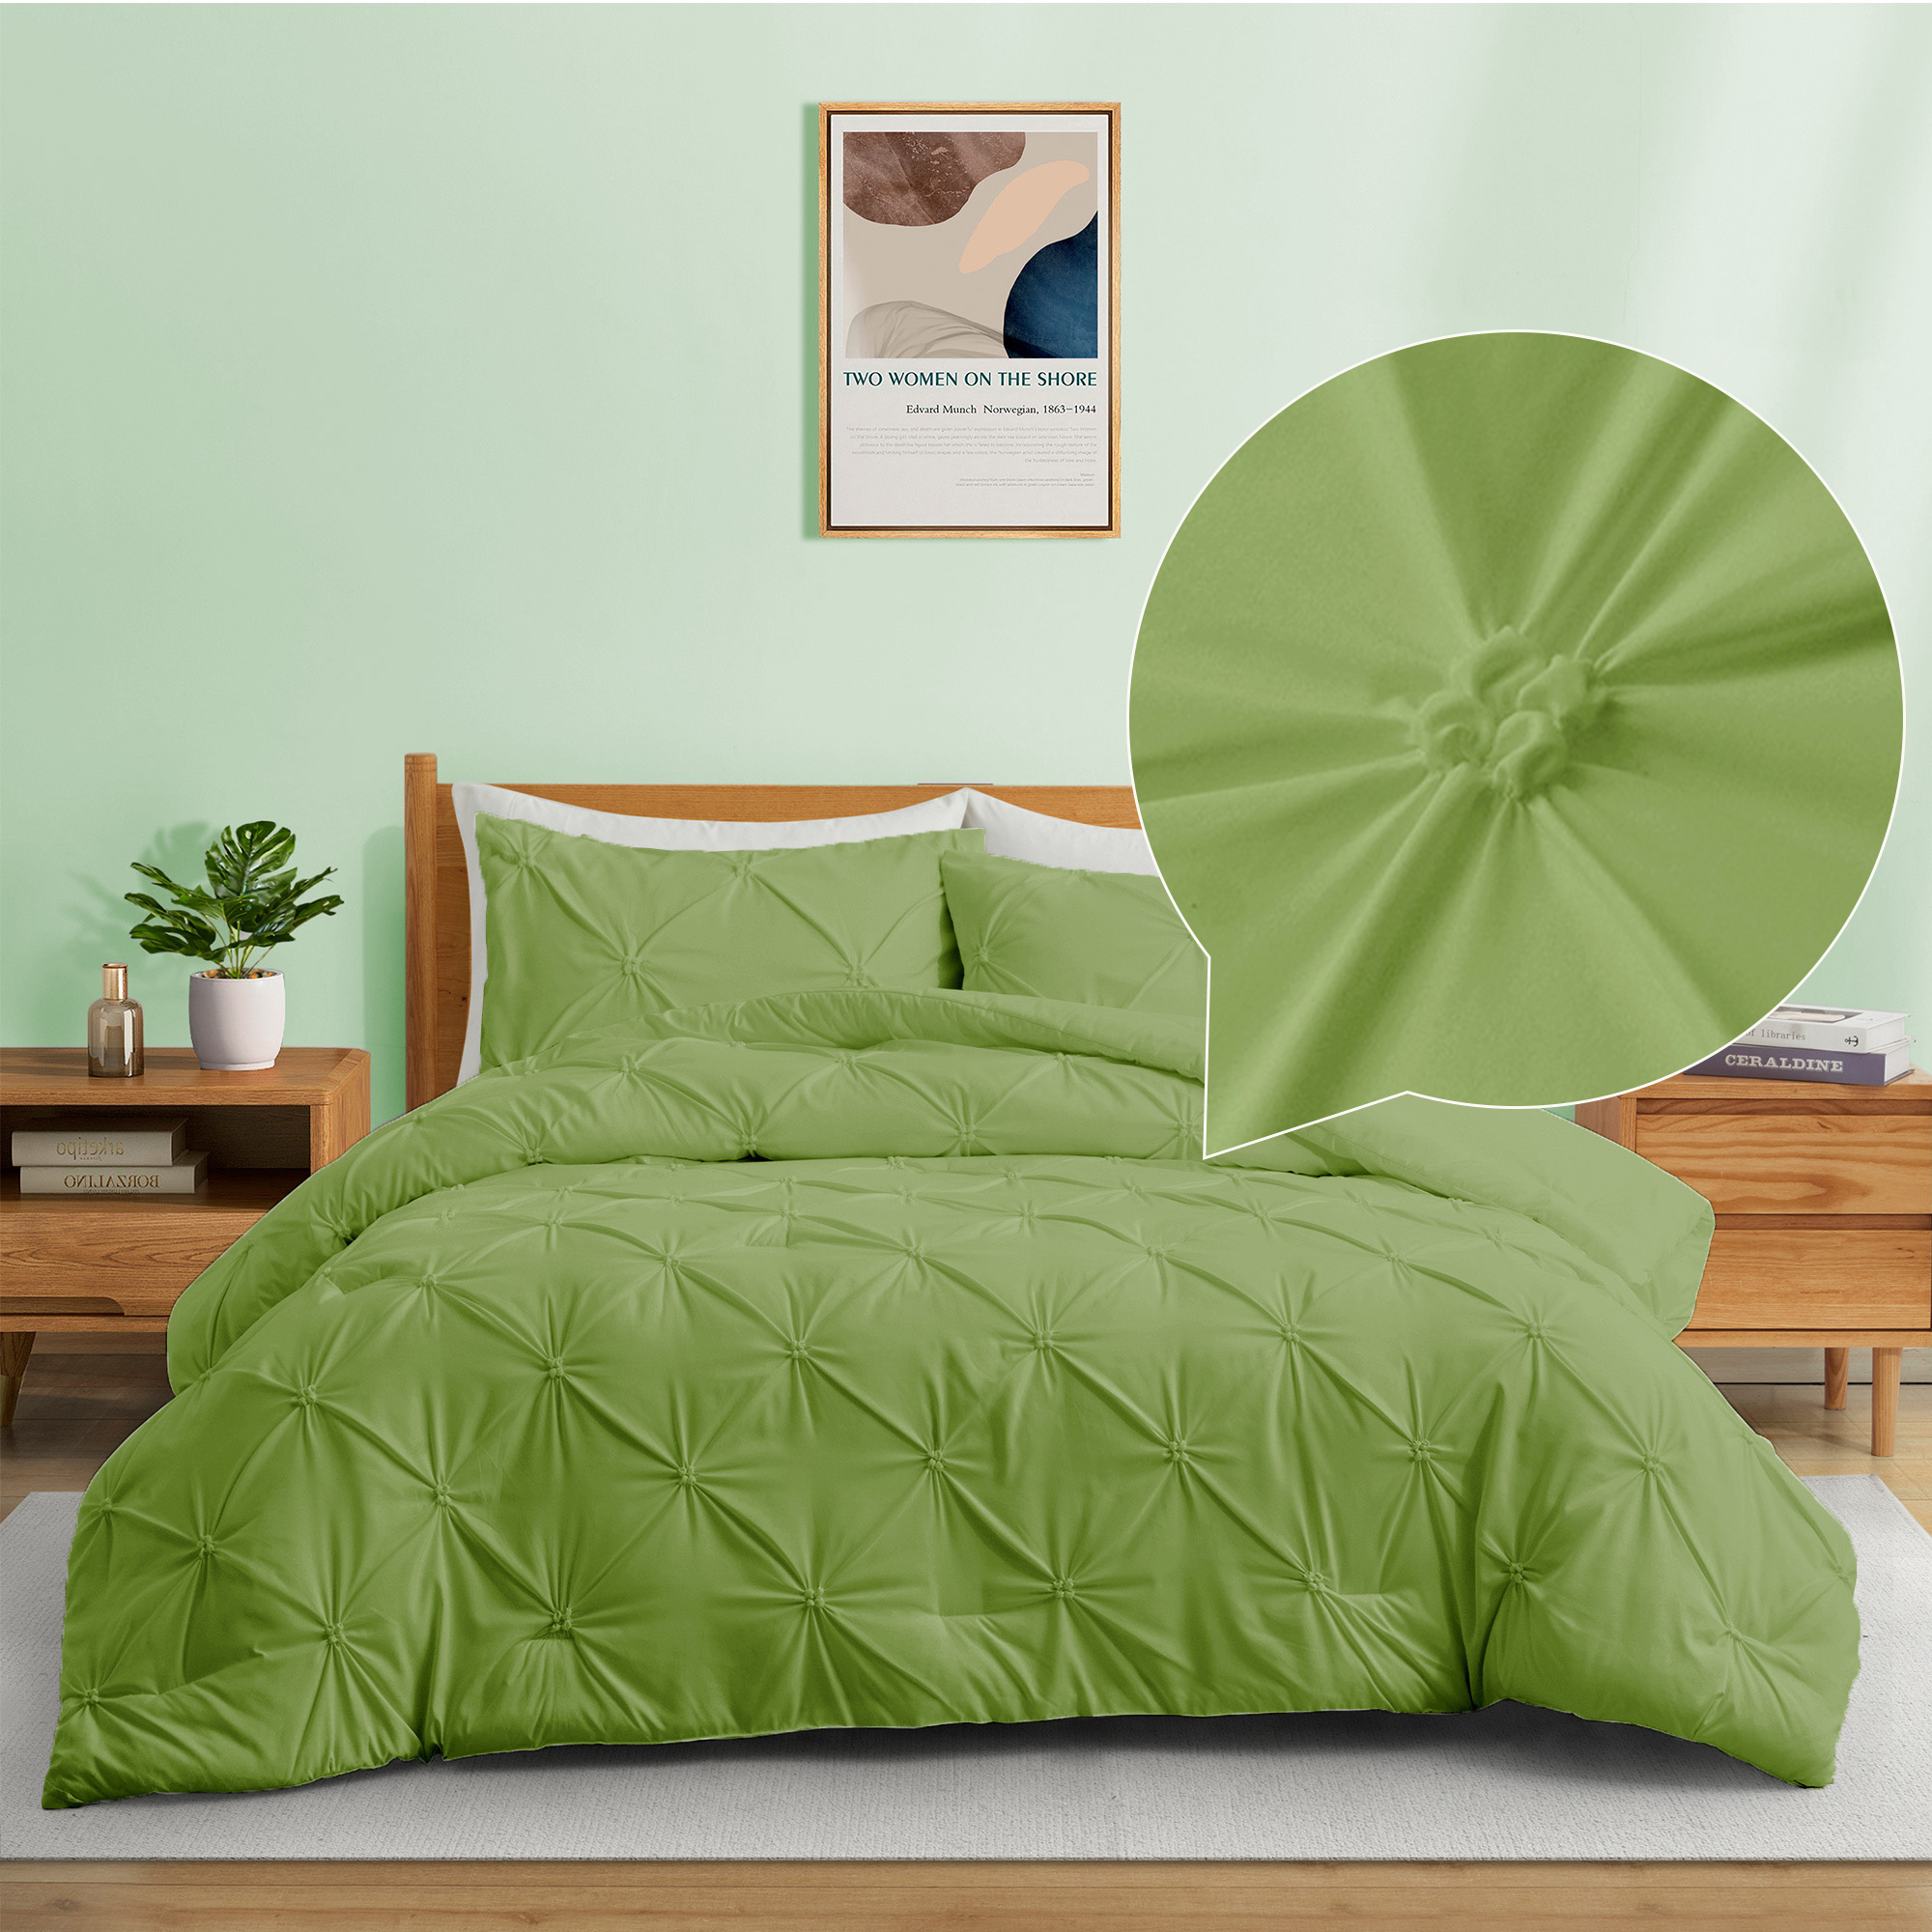 All Seasons Down Alternative Comforter Set, Pinch Pleat Design - Olive Green, King